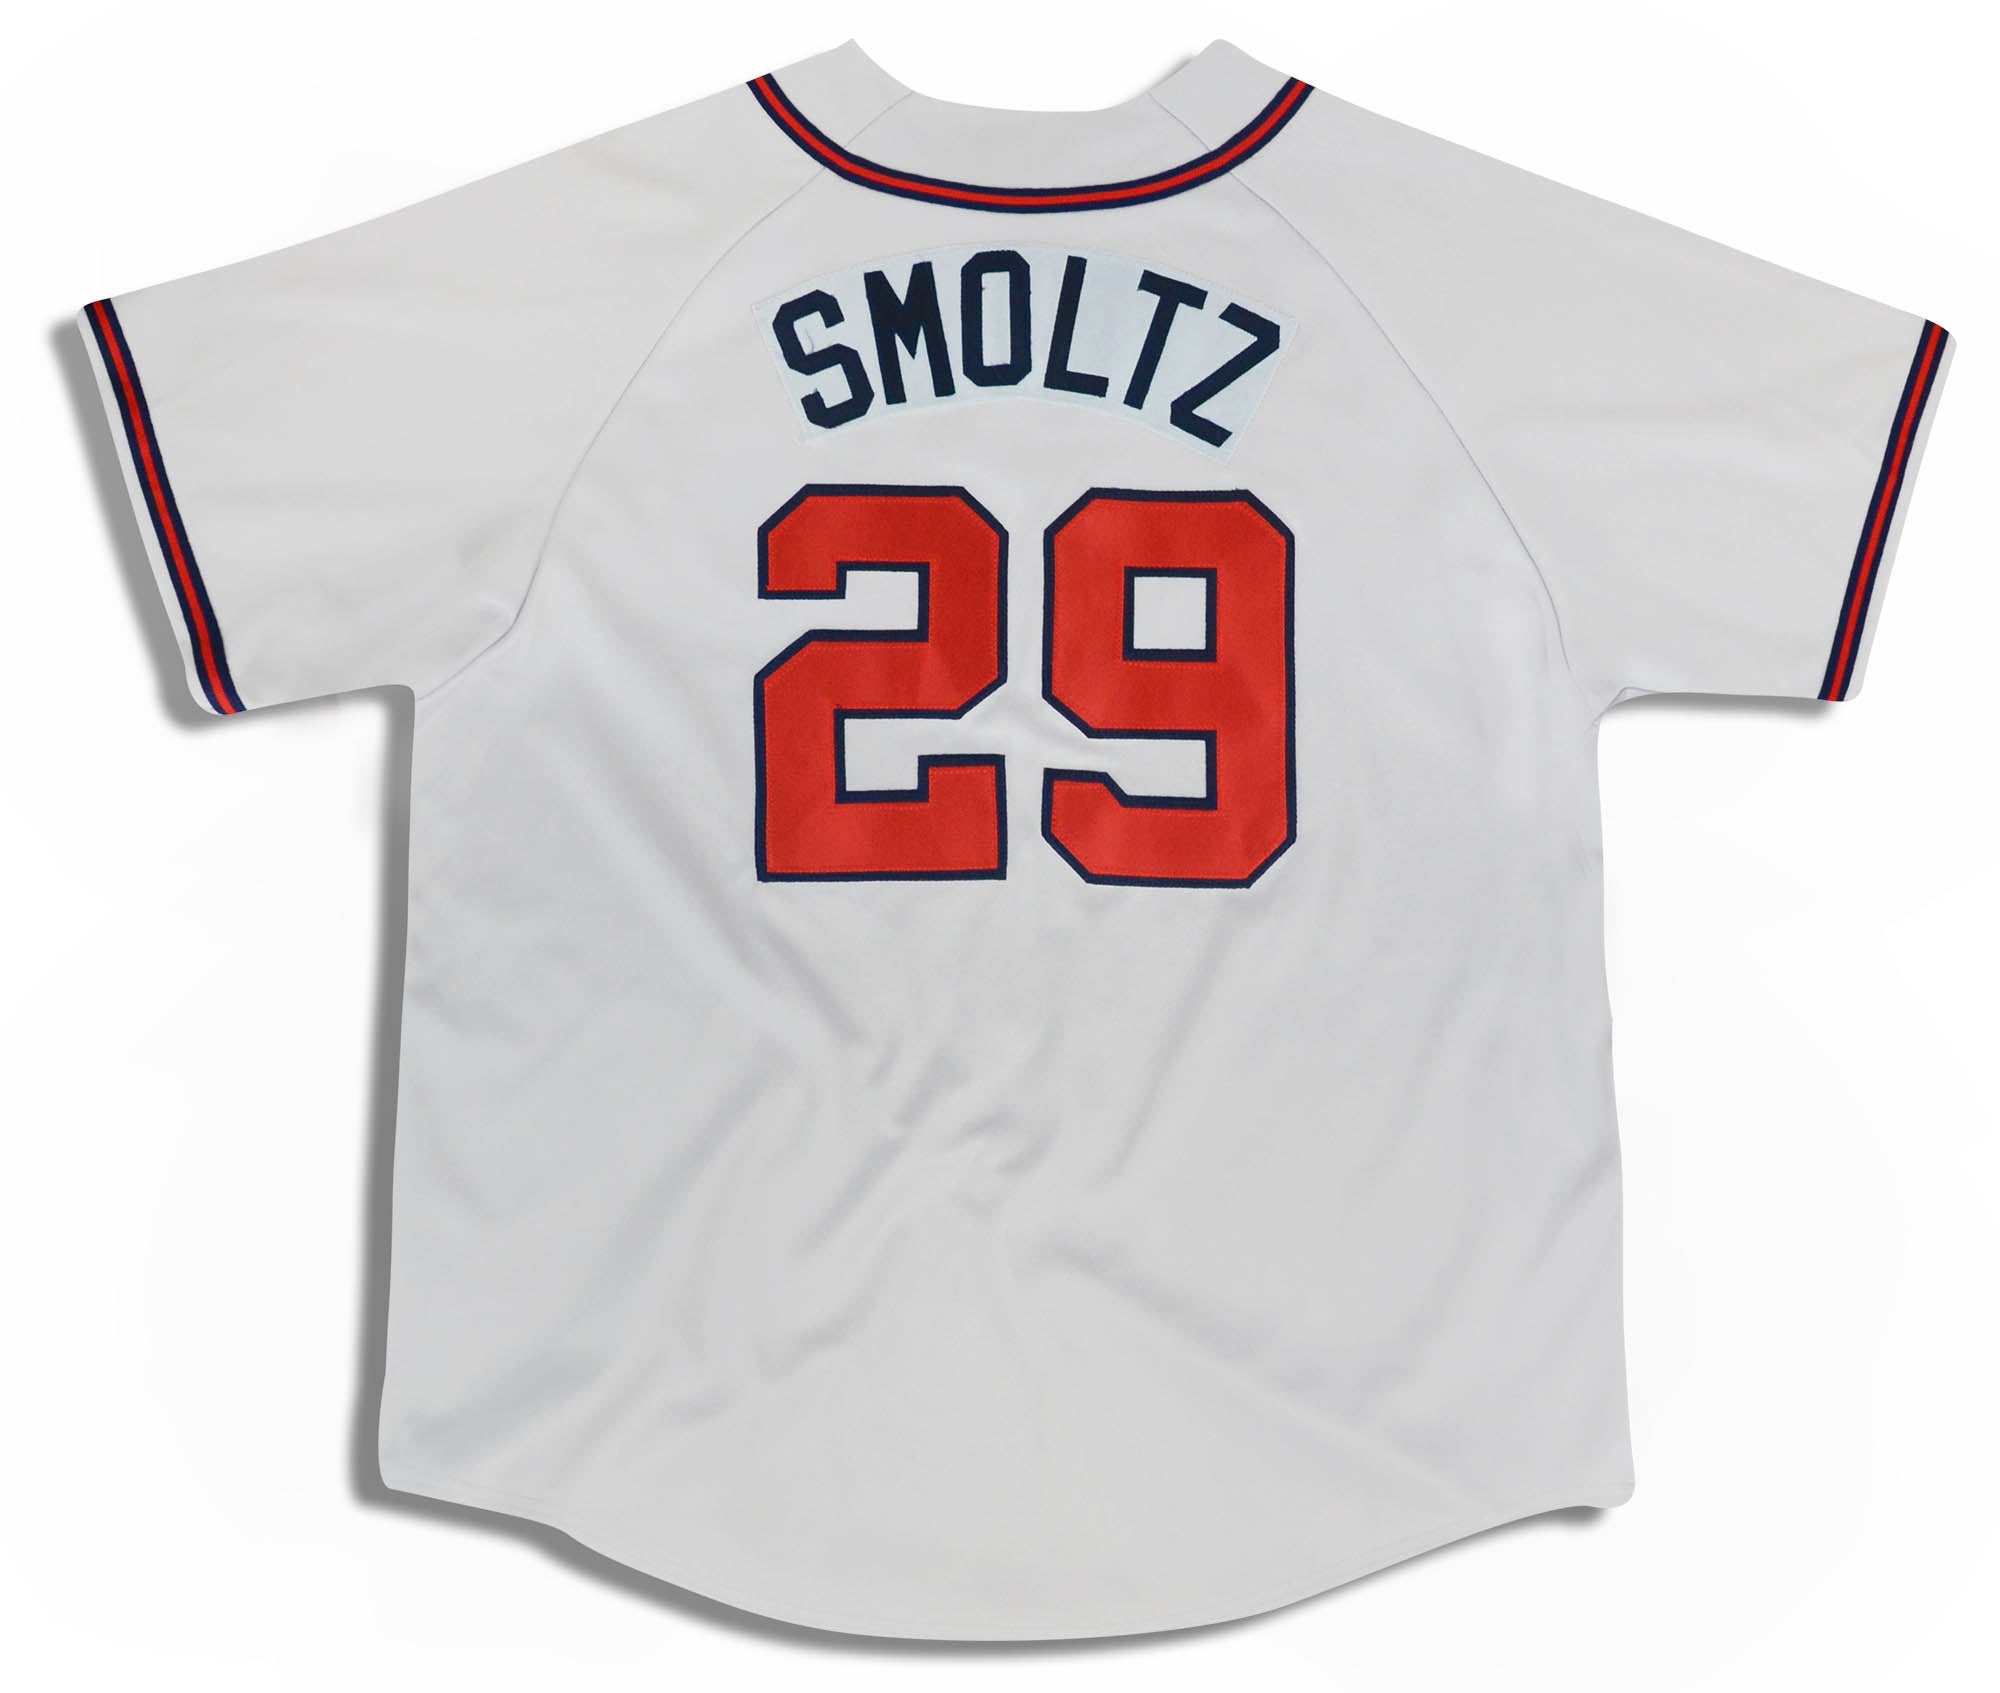 Braves retire No. 29 jersey of John Smoltz